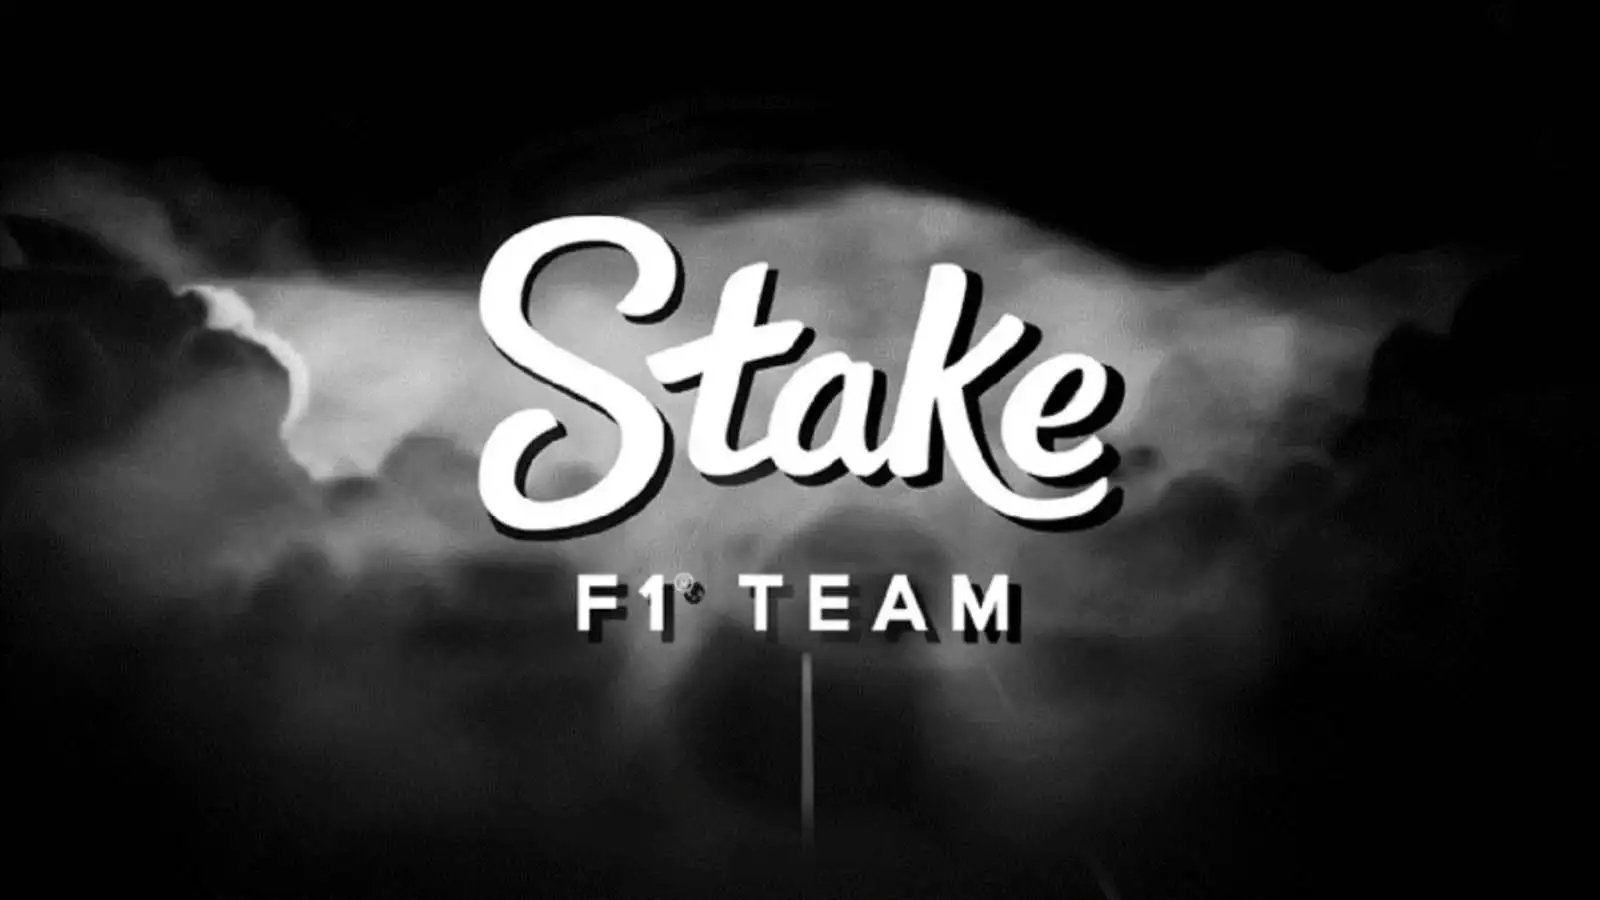 Stake F1 team logo, Sauber rebranding.